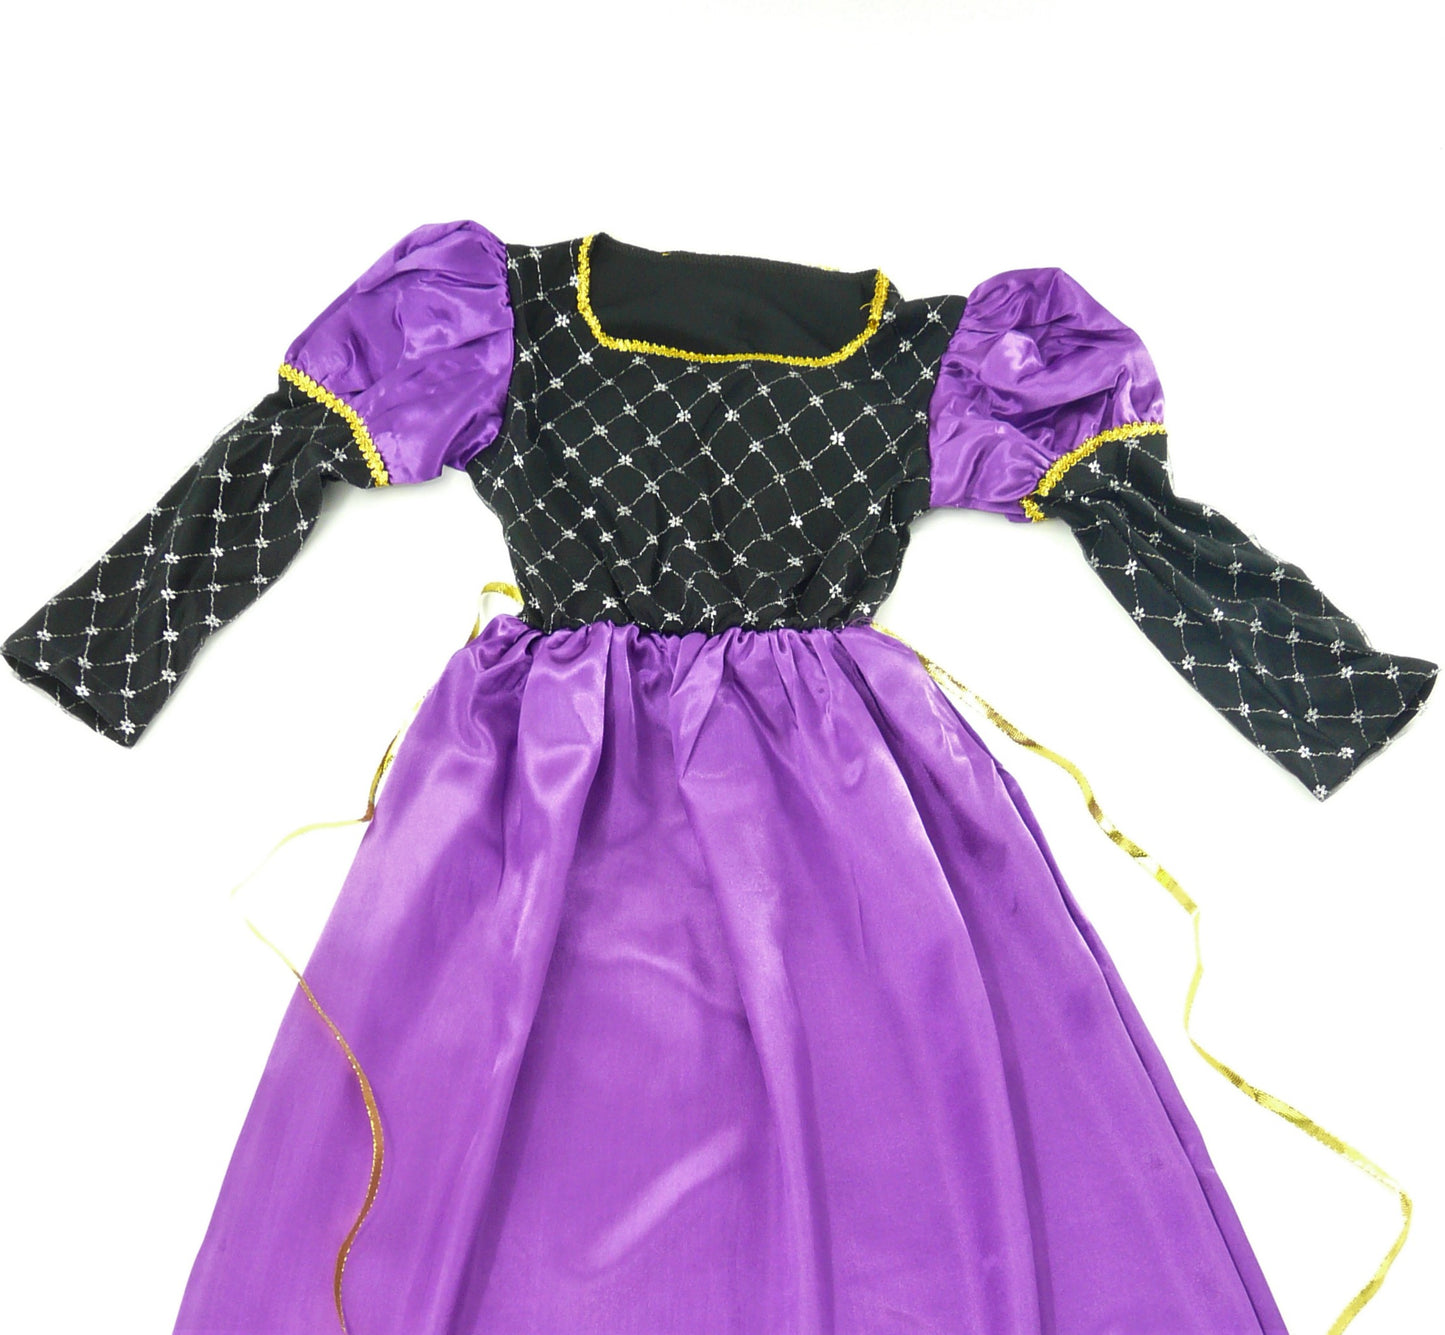 Girls Purple Renaissance Fancy Dress Costume Age 4-6